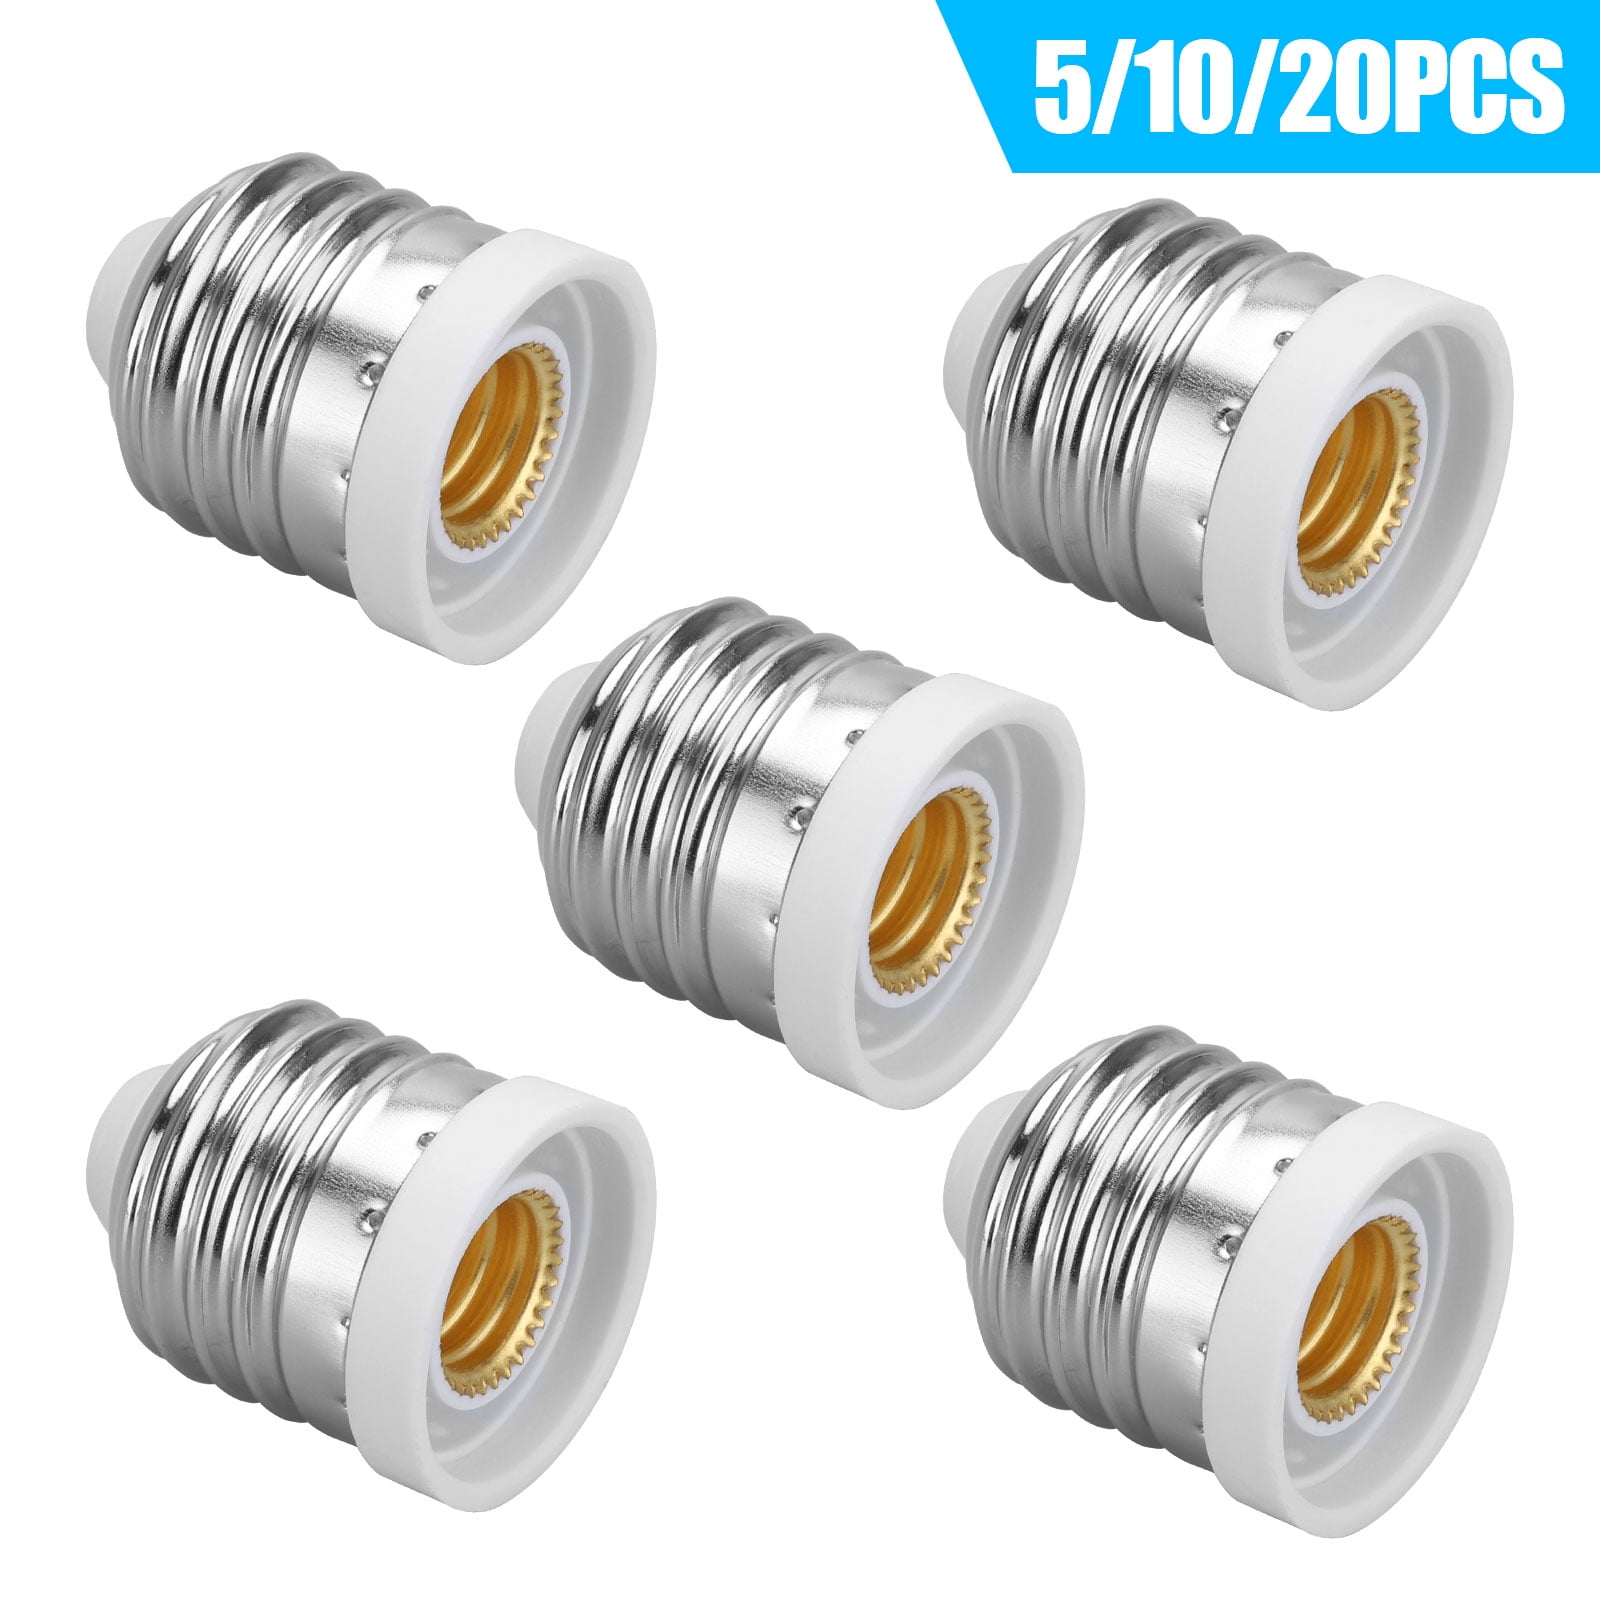 5/10/20Pcs E10 Round Screw Base LED Light Bulbs Lamp Socket Adapter Converter 